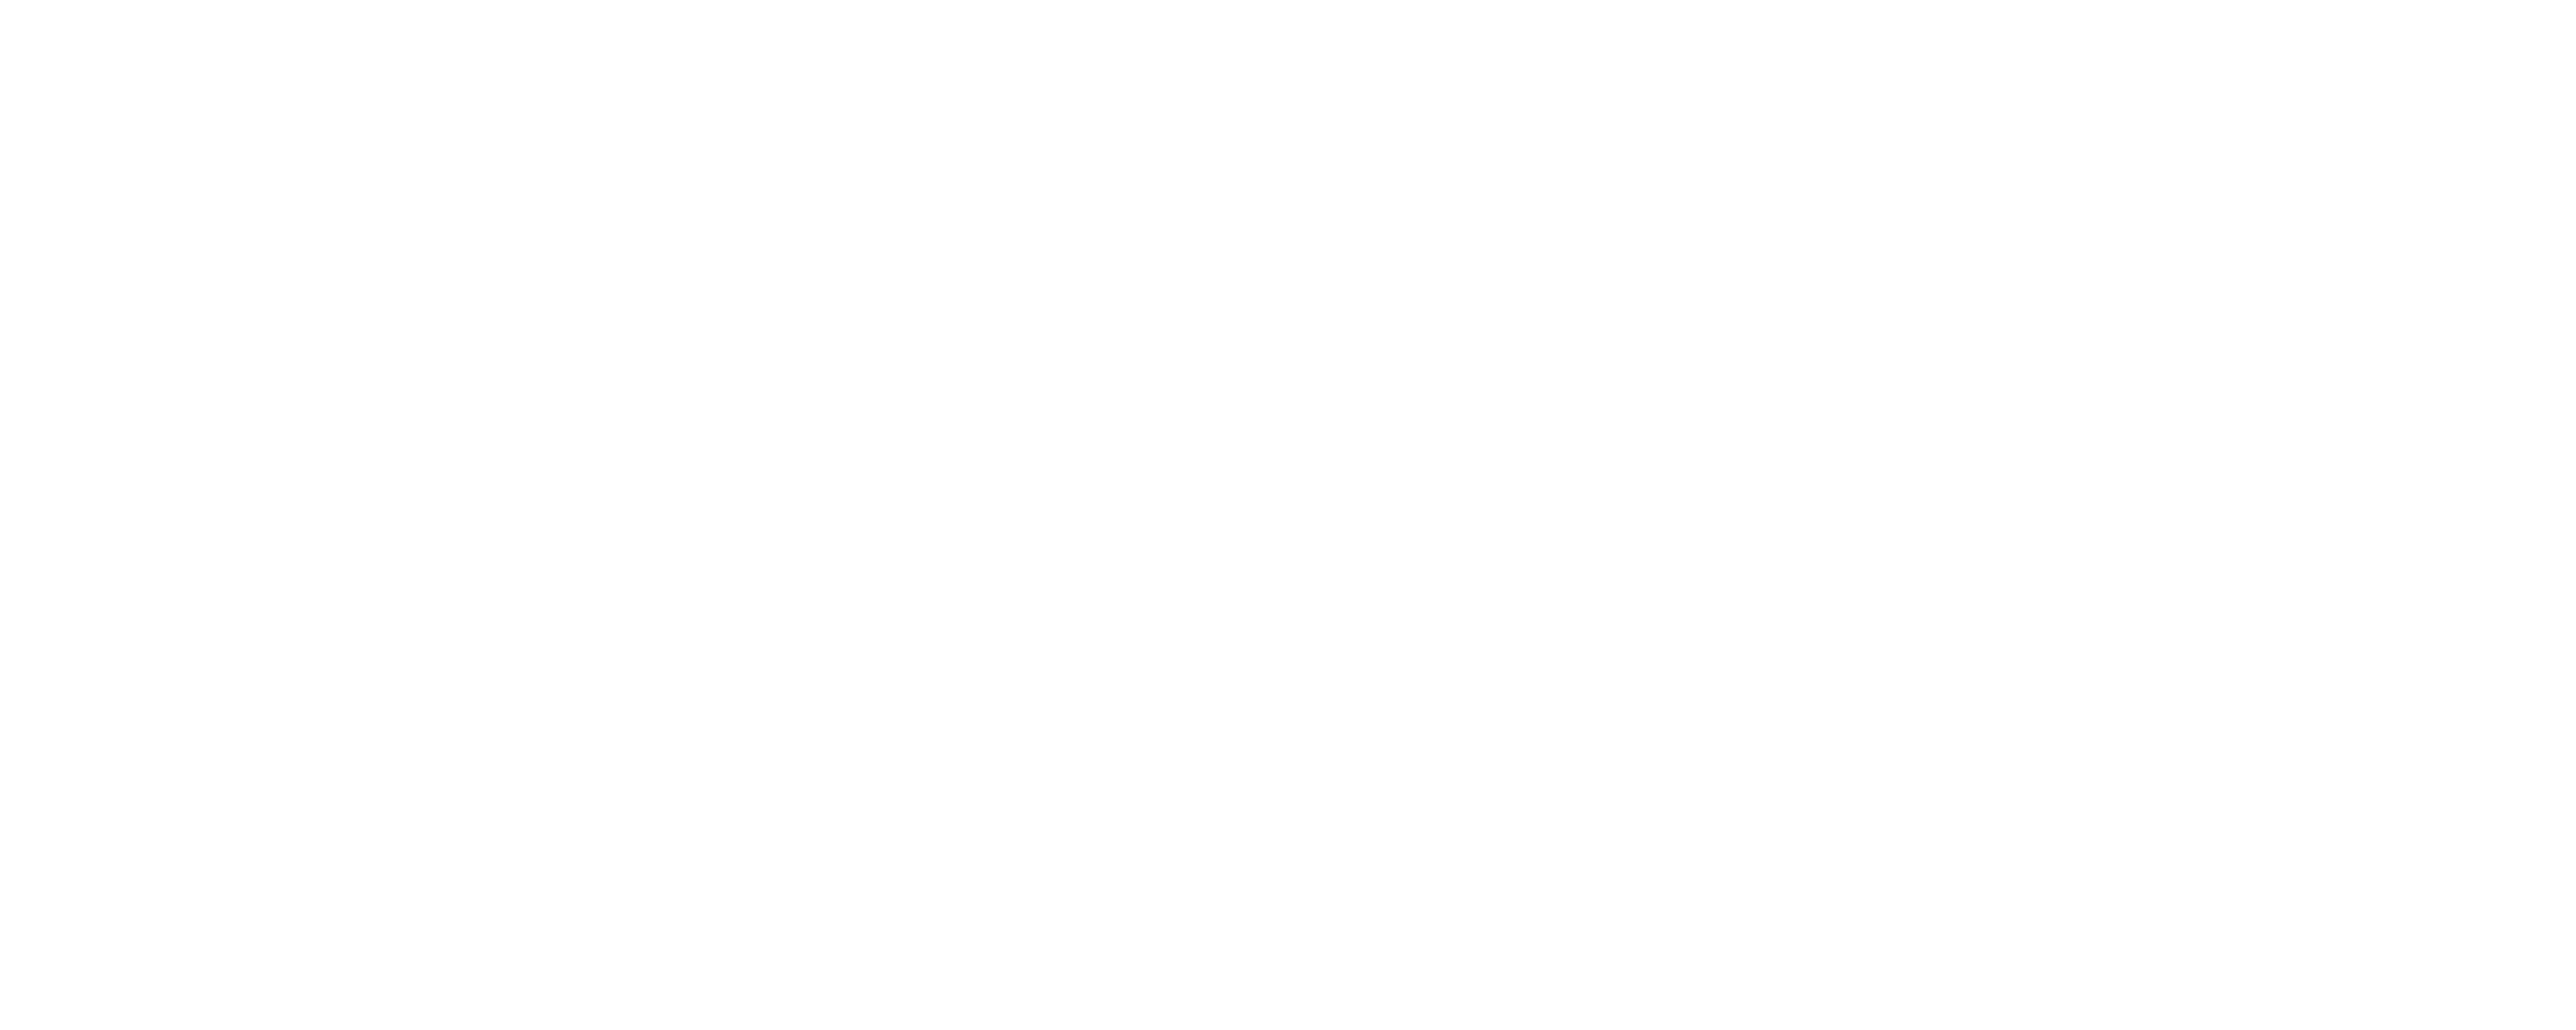 UrbanEquitiesMultifamilyInvestmentsLogoWhite